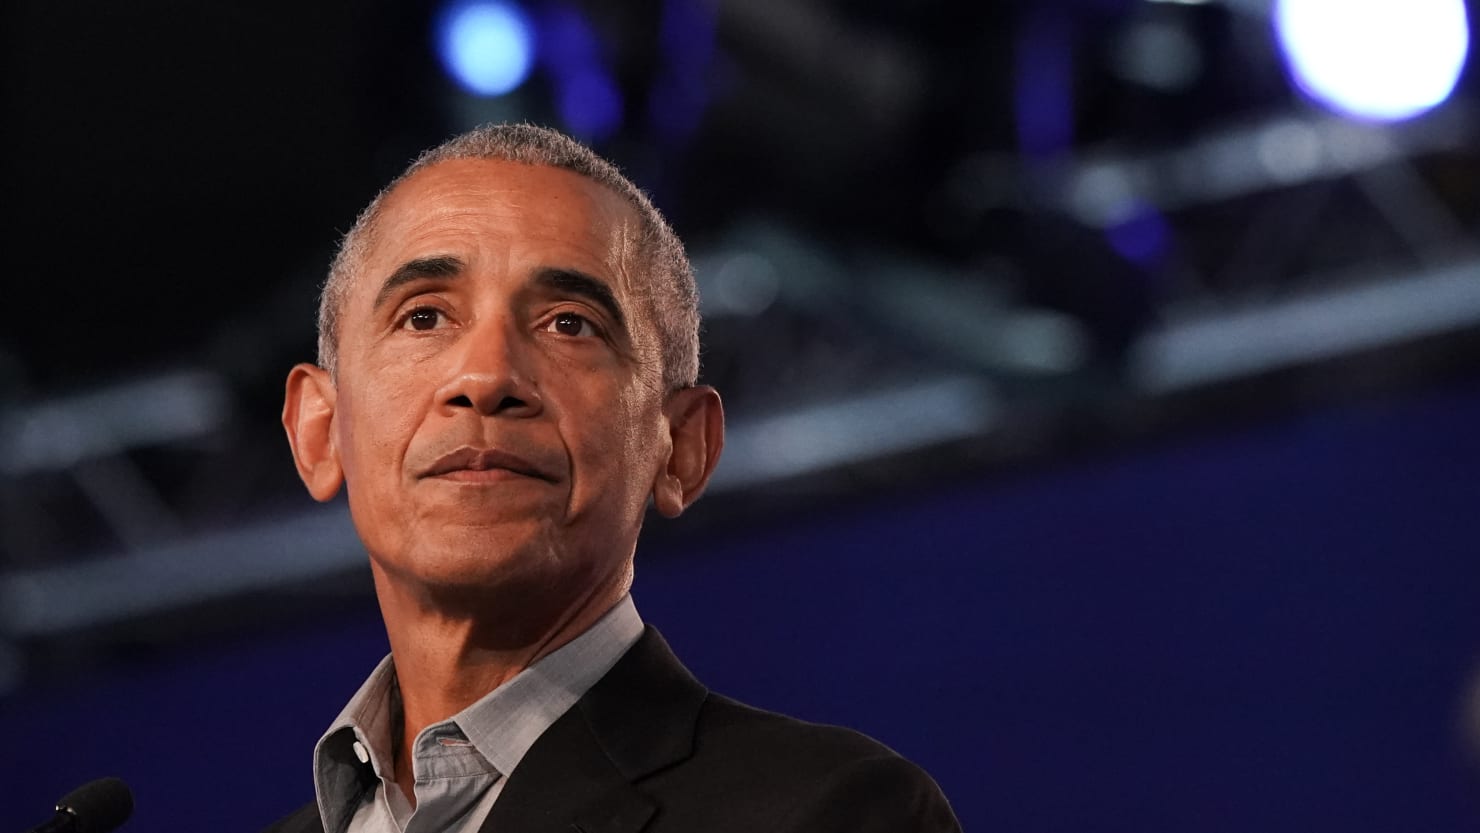 Barack Obama Reveals He Has COVID-19 – The Daily Beast